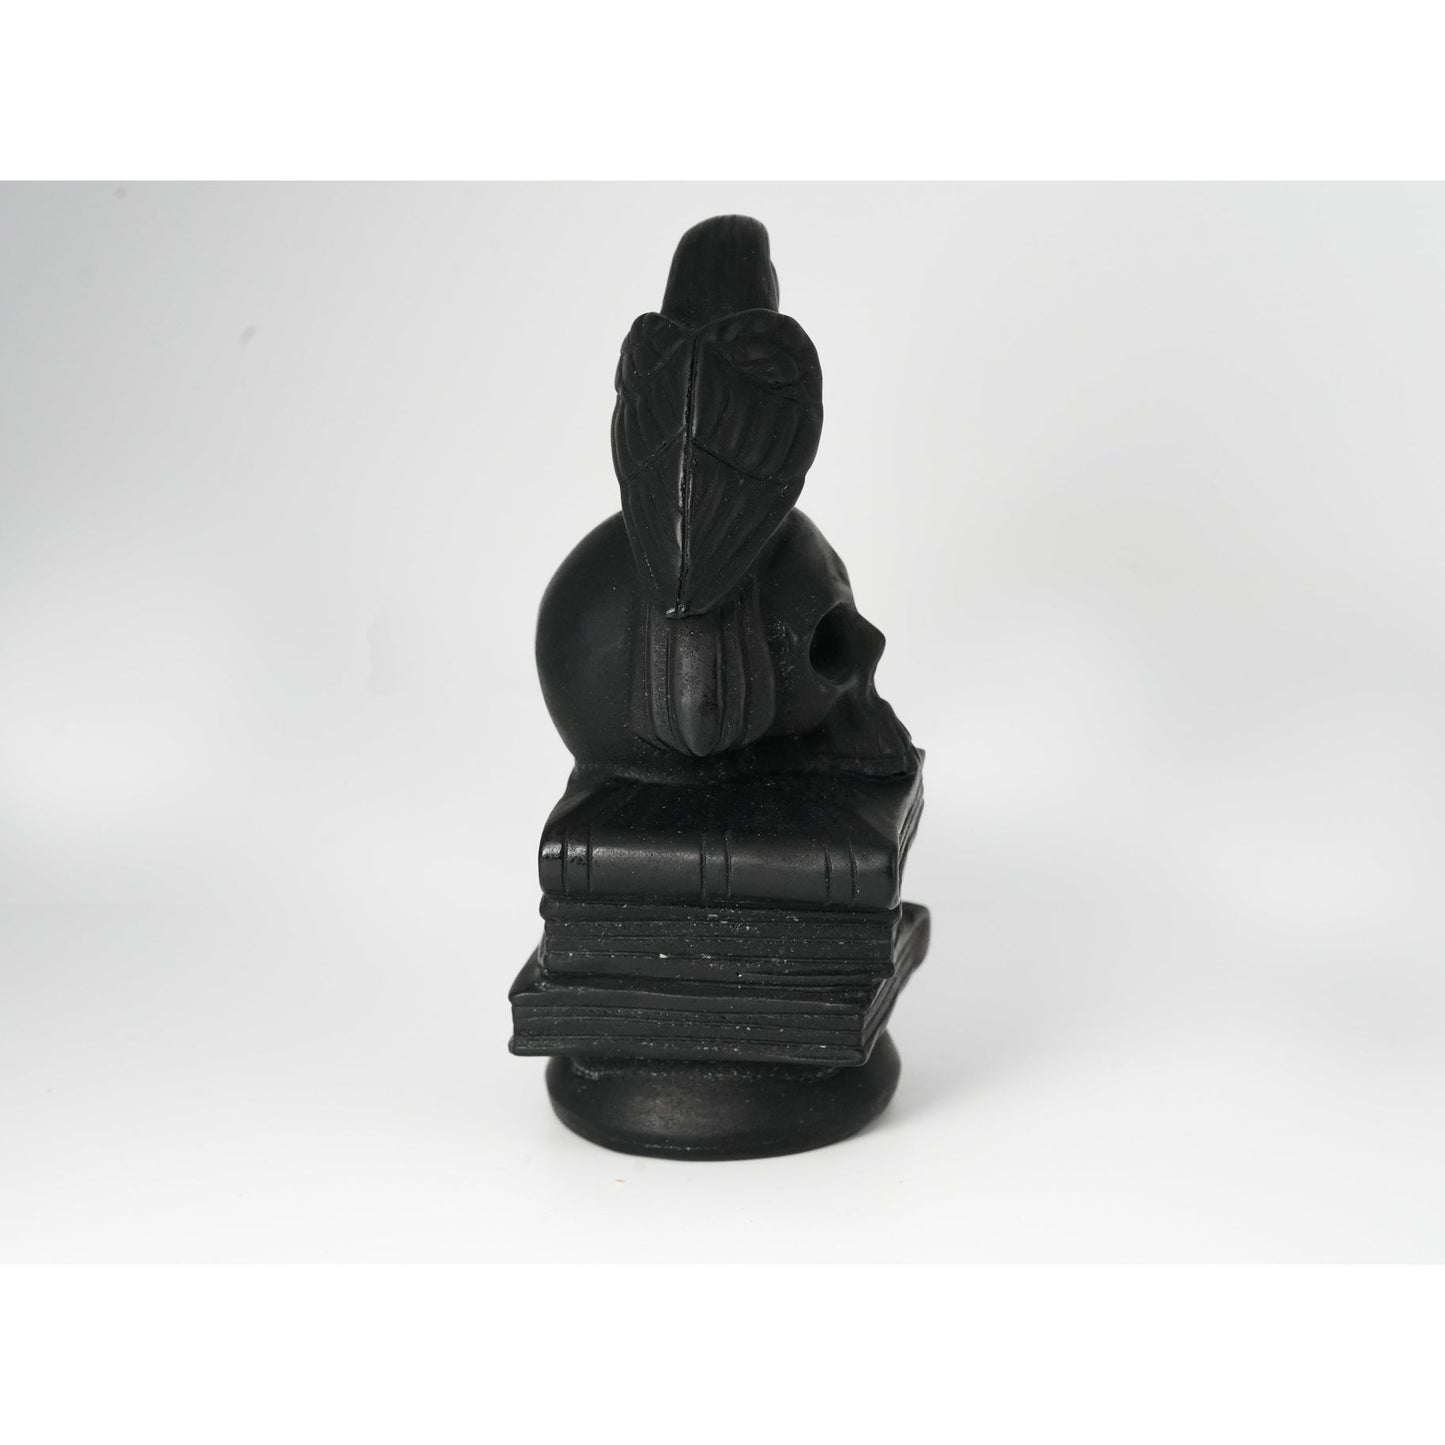 ‘The Raven’ Obsidian Sculpture - Nocturne LLC